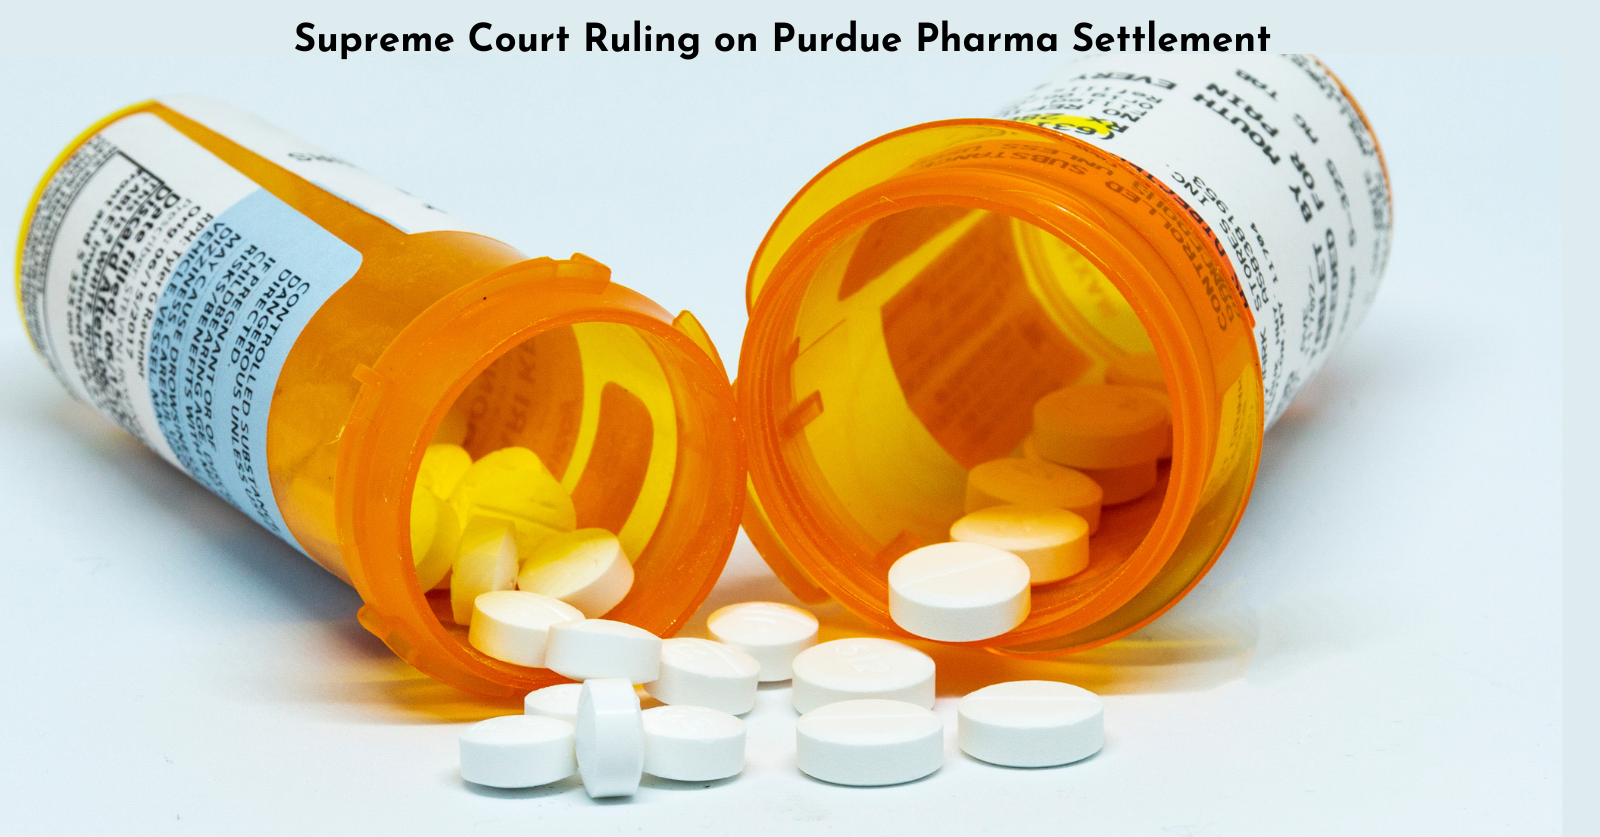 Supreme Court rejects Purdue Pharma bankruptcy deal, impacting opioid crisis litigation